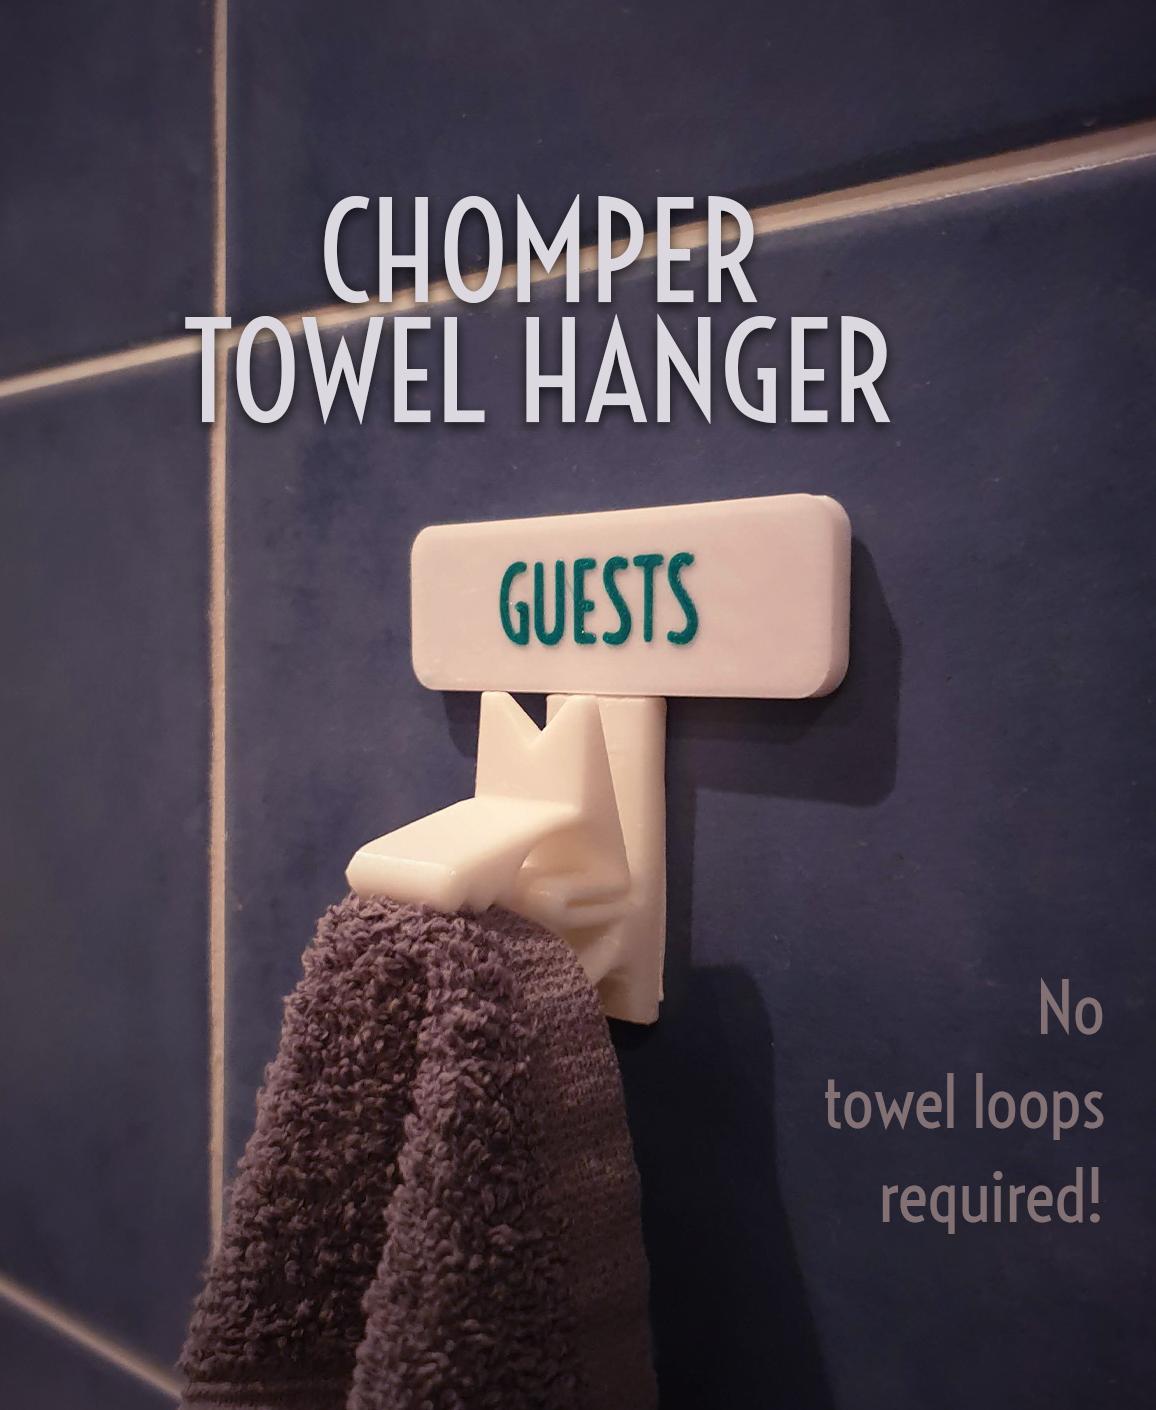 Chomper Hand Towel Hanger 3d model